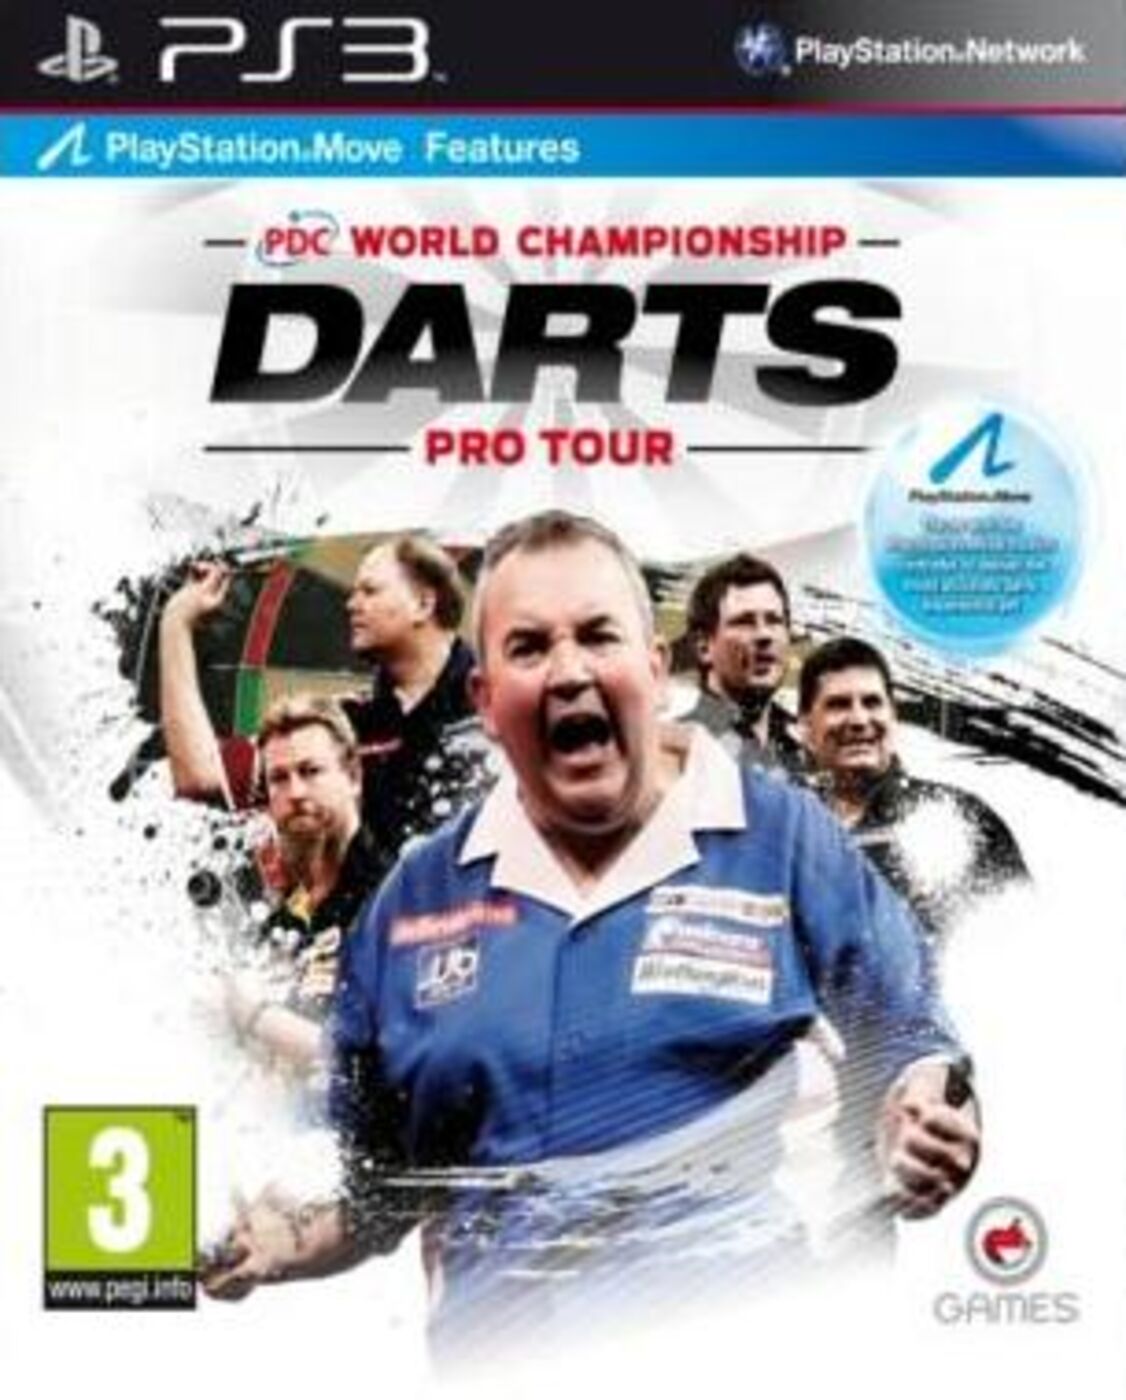 pdc world championship darts pro tour torrent pc games